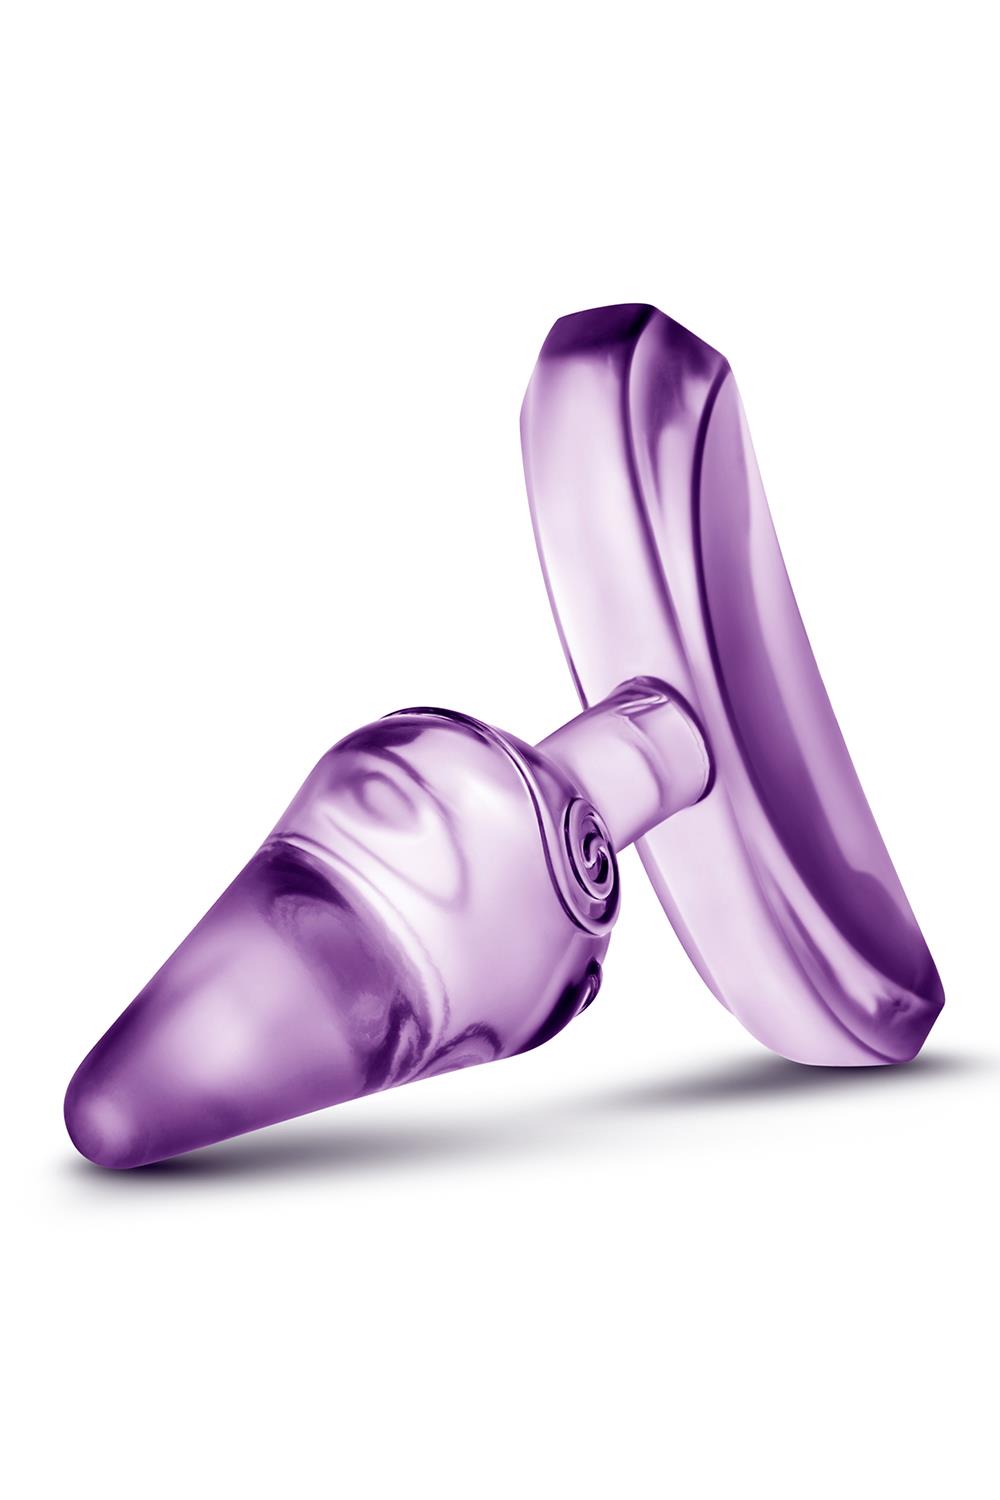 Play with Me - Jolly - Plug Purple